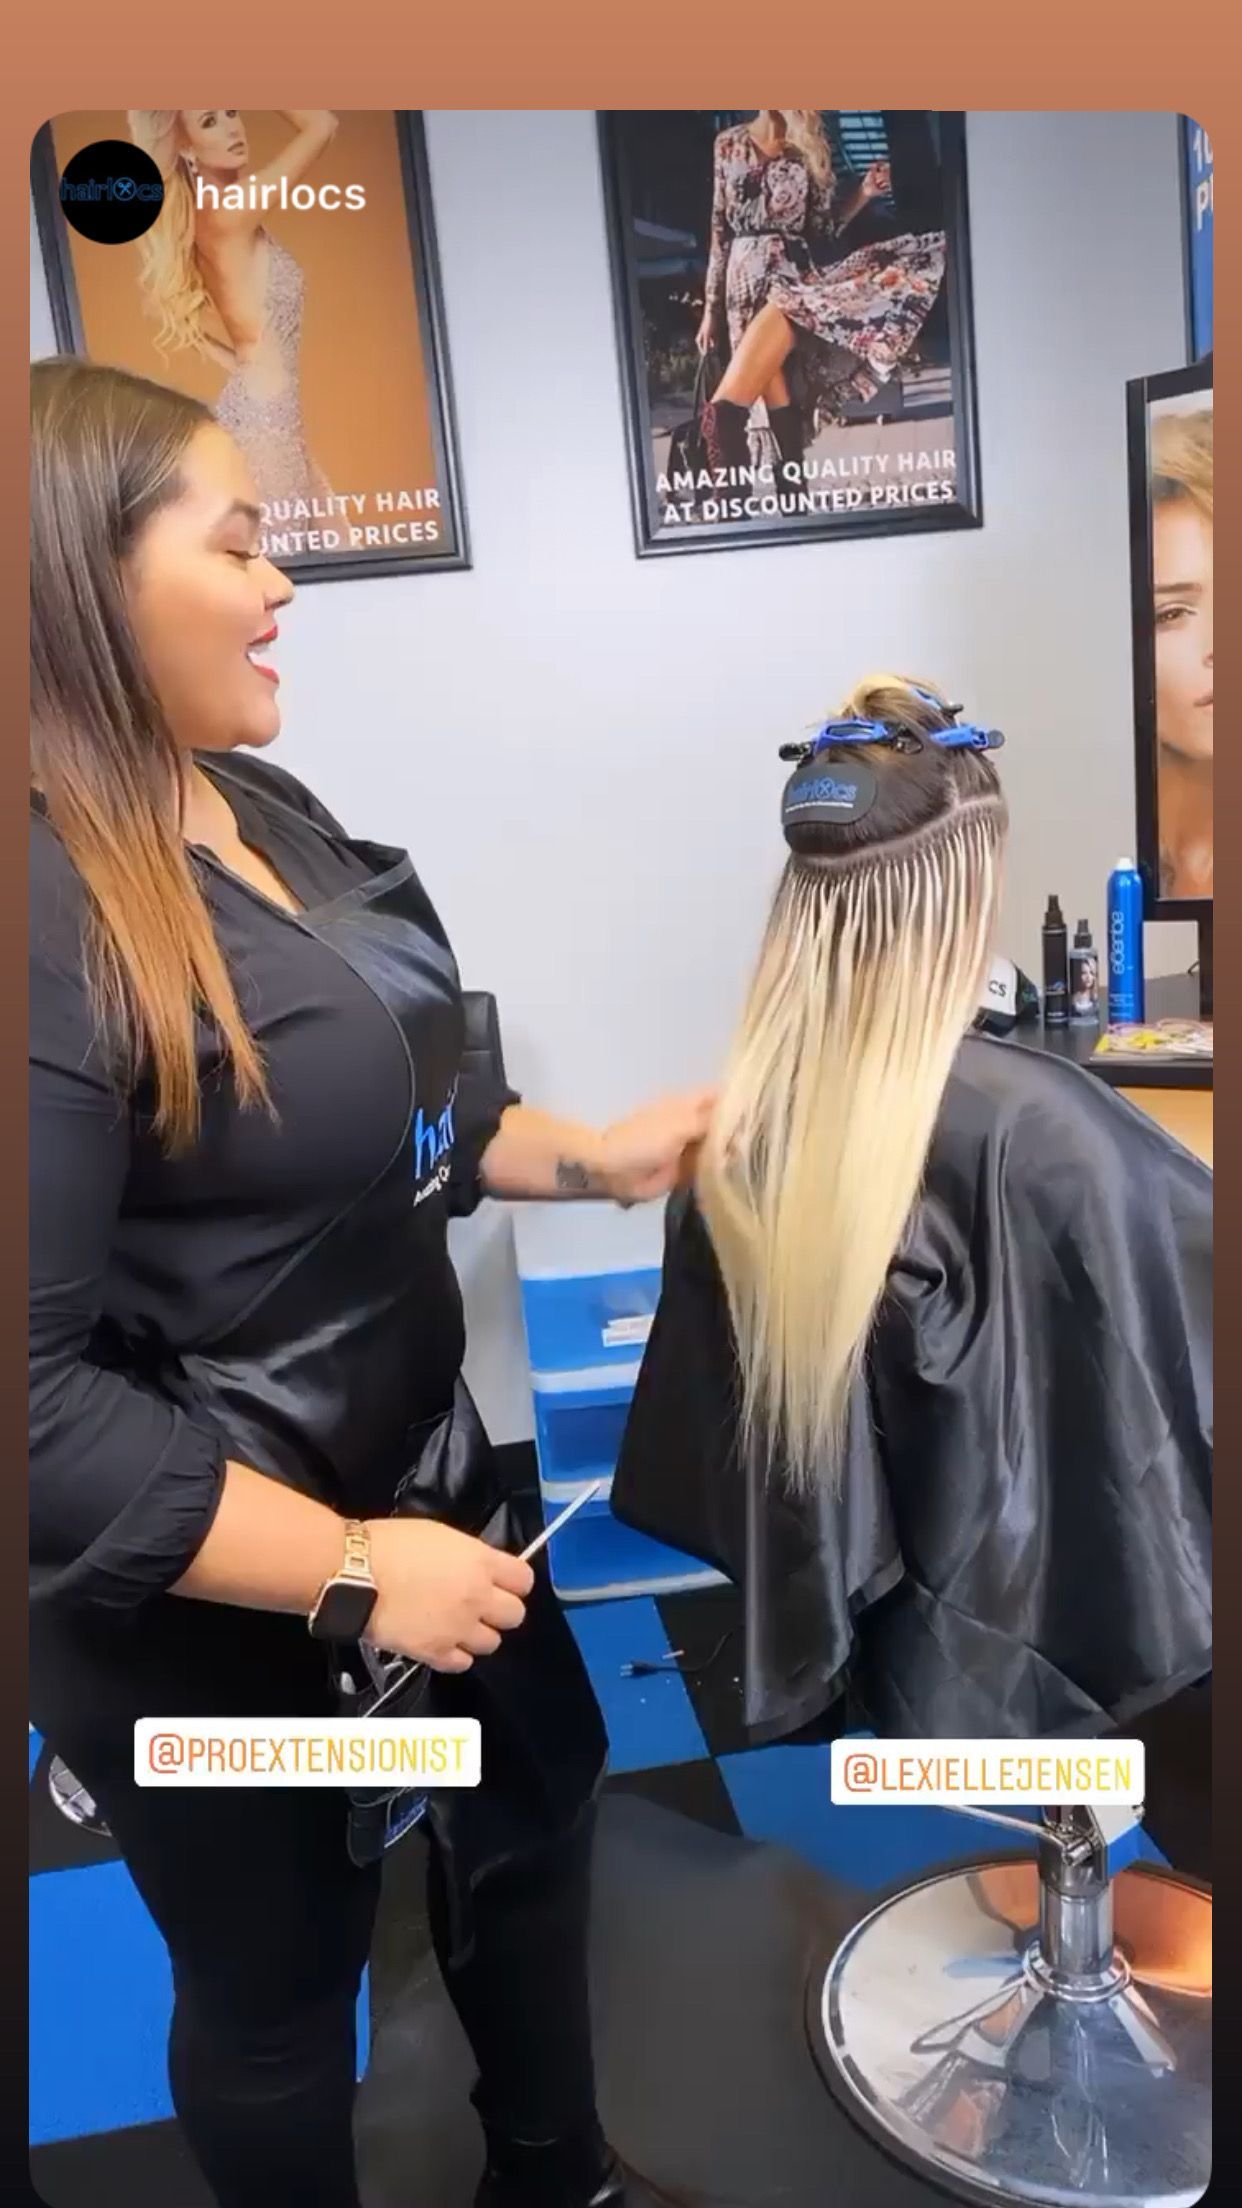 a woman is cutting a woman 's hair in a salon .